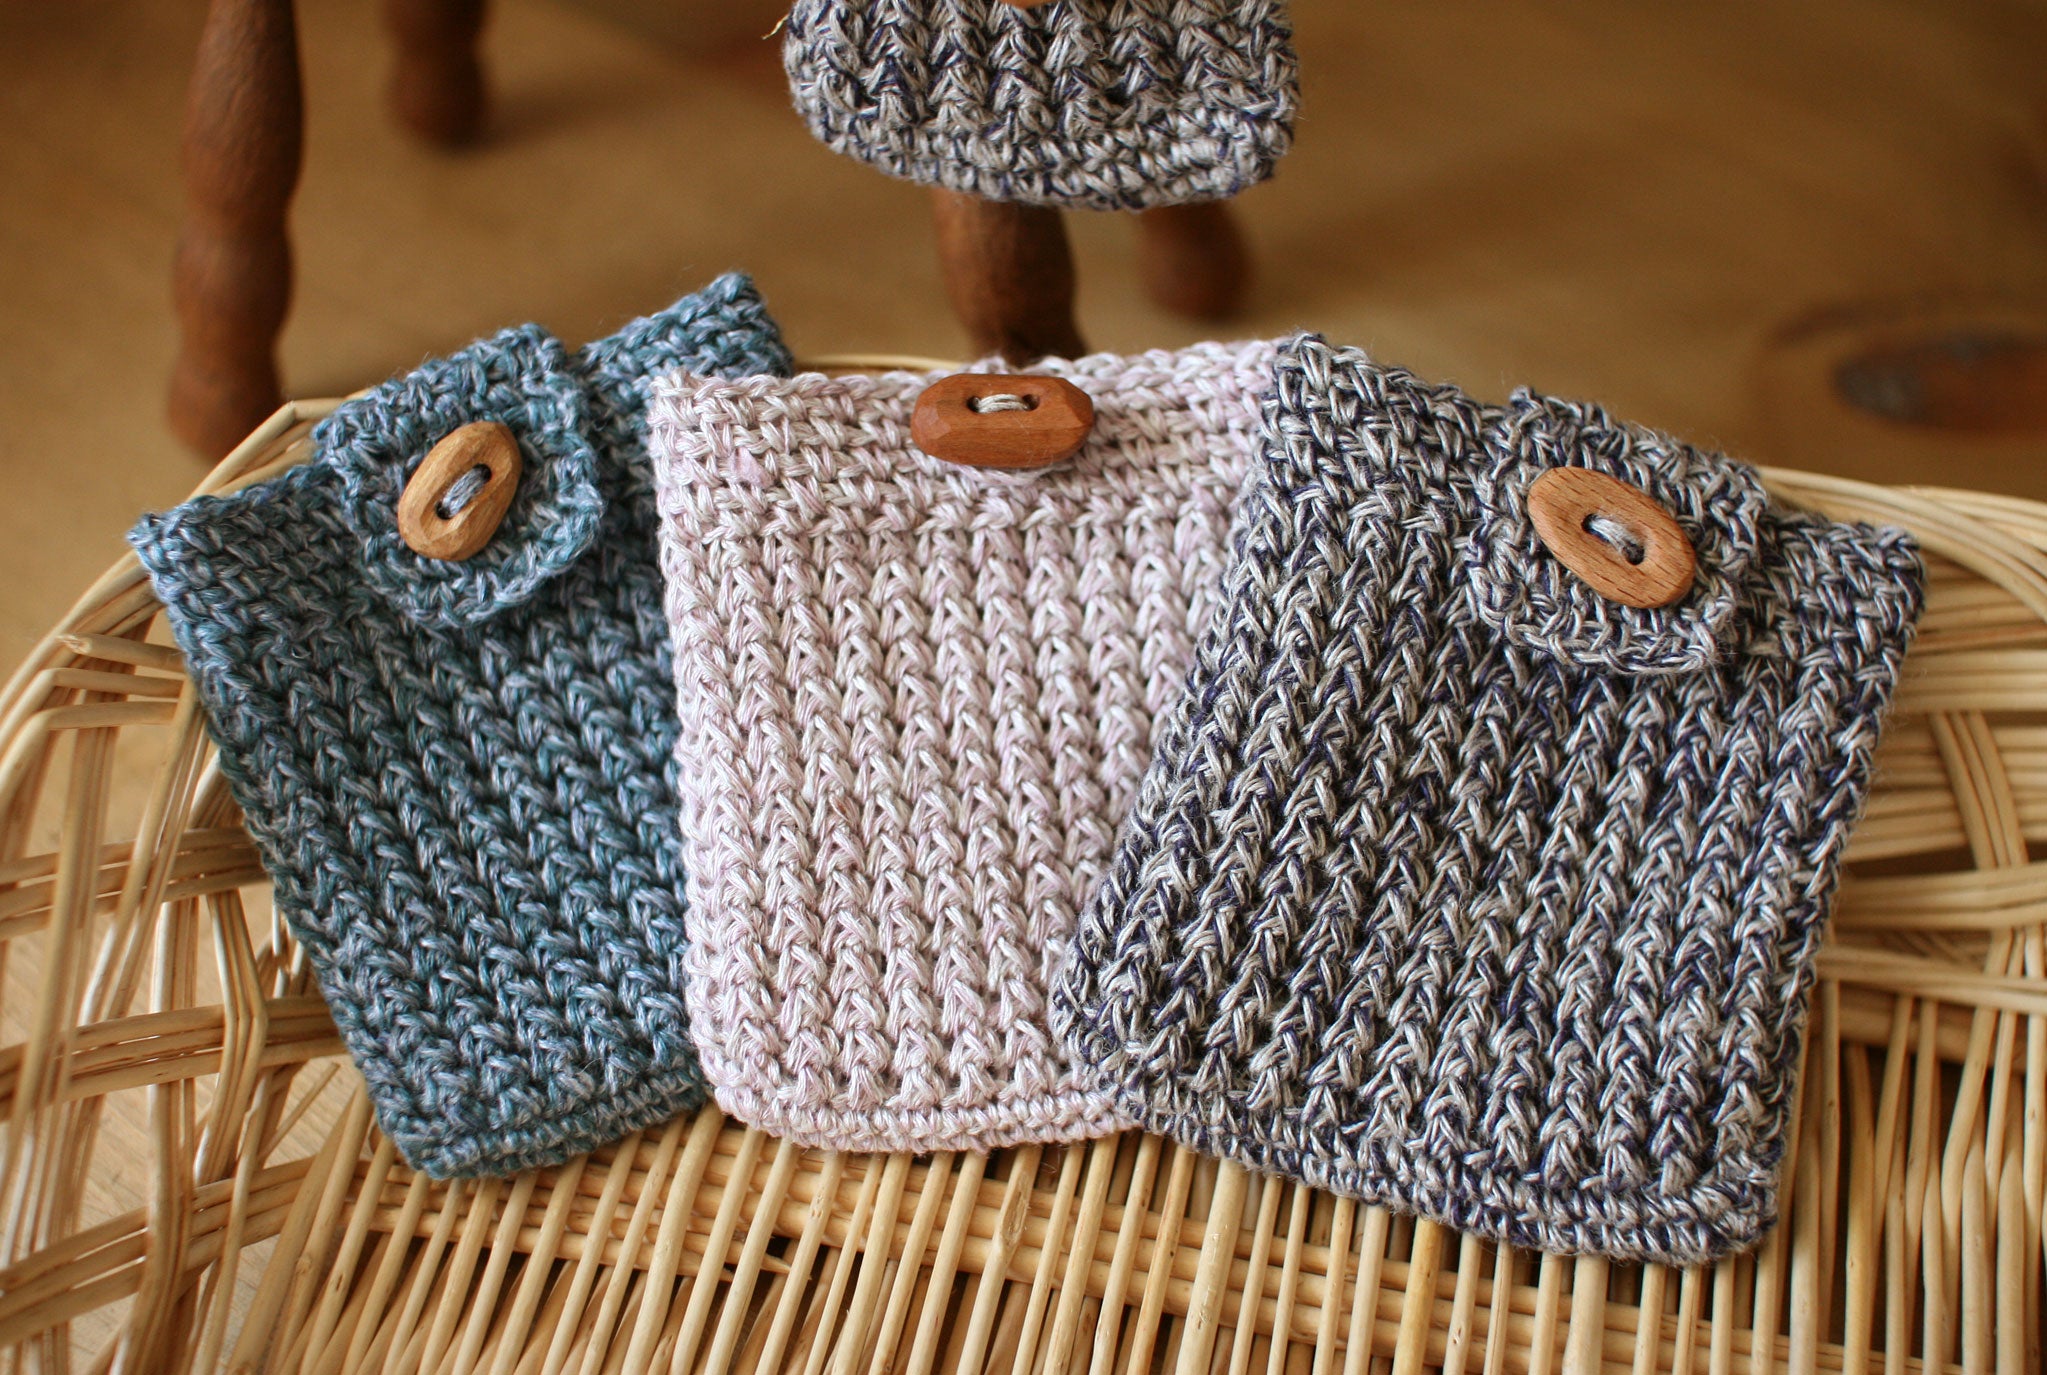 "Buttoned pouch" Crochet Pattern